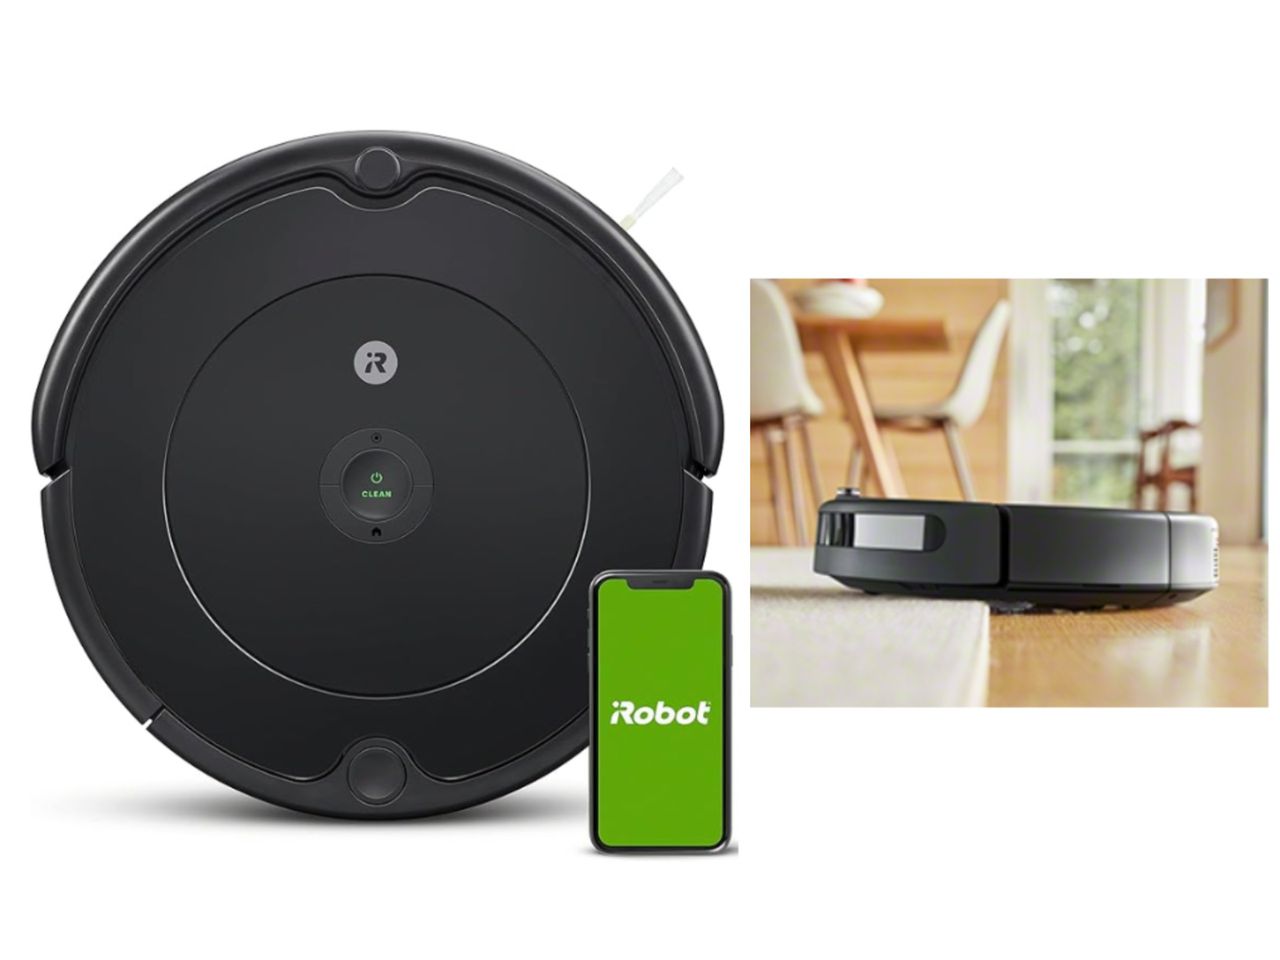 Amazon deals: iRobot Roomba Vacuum cleaner on sale for $159